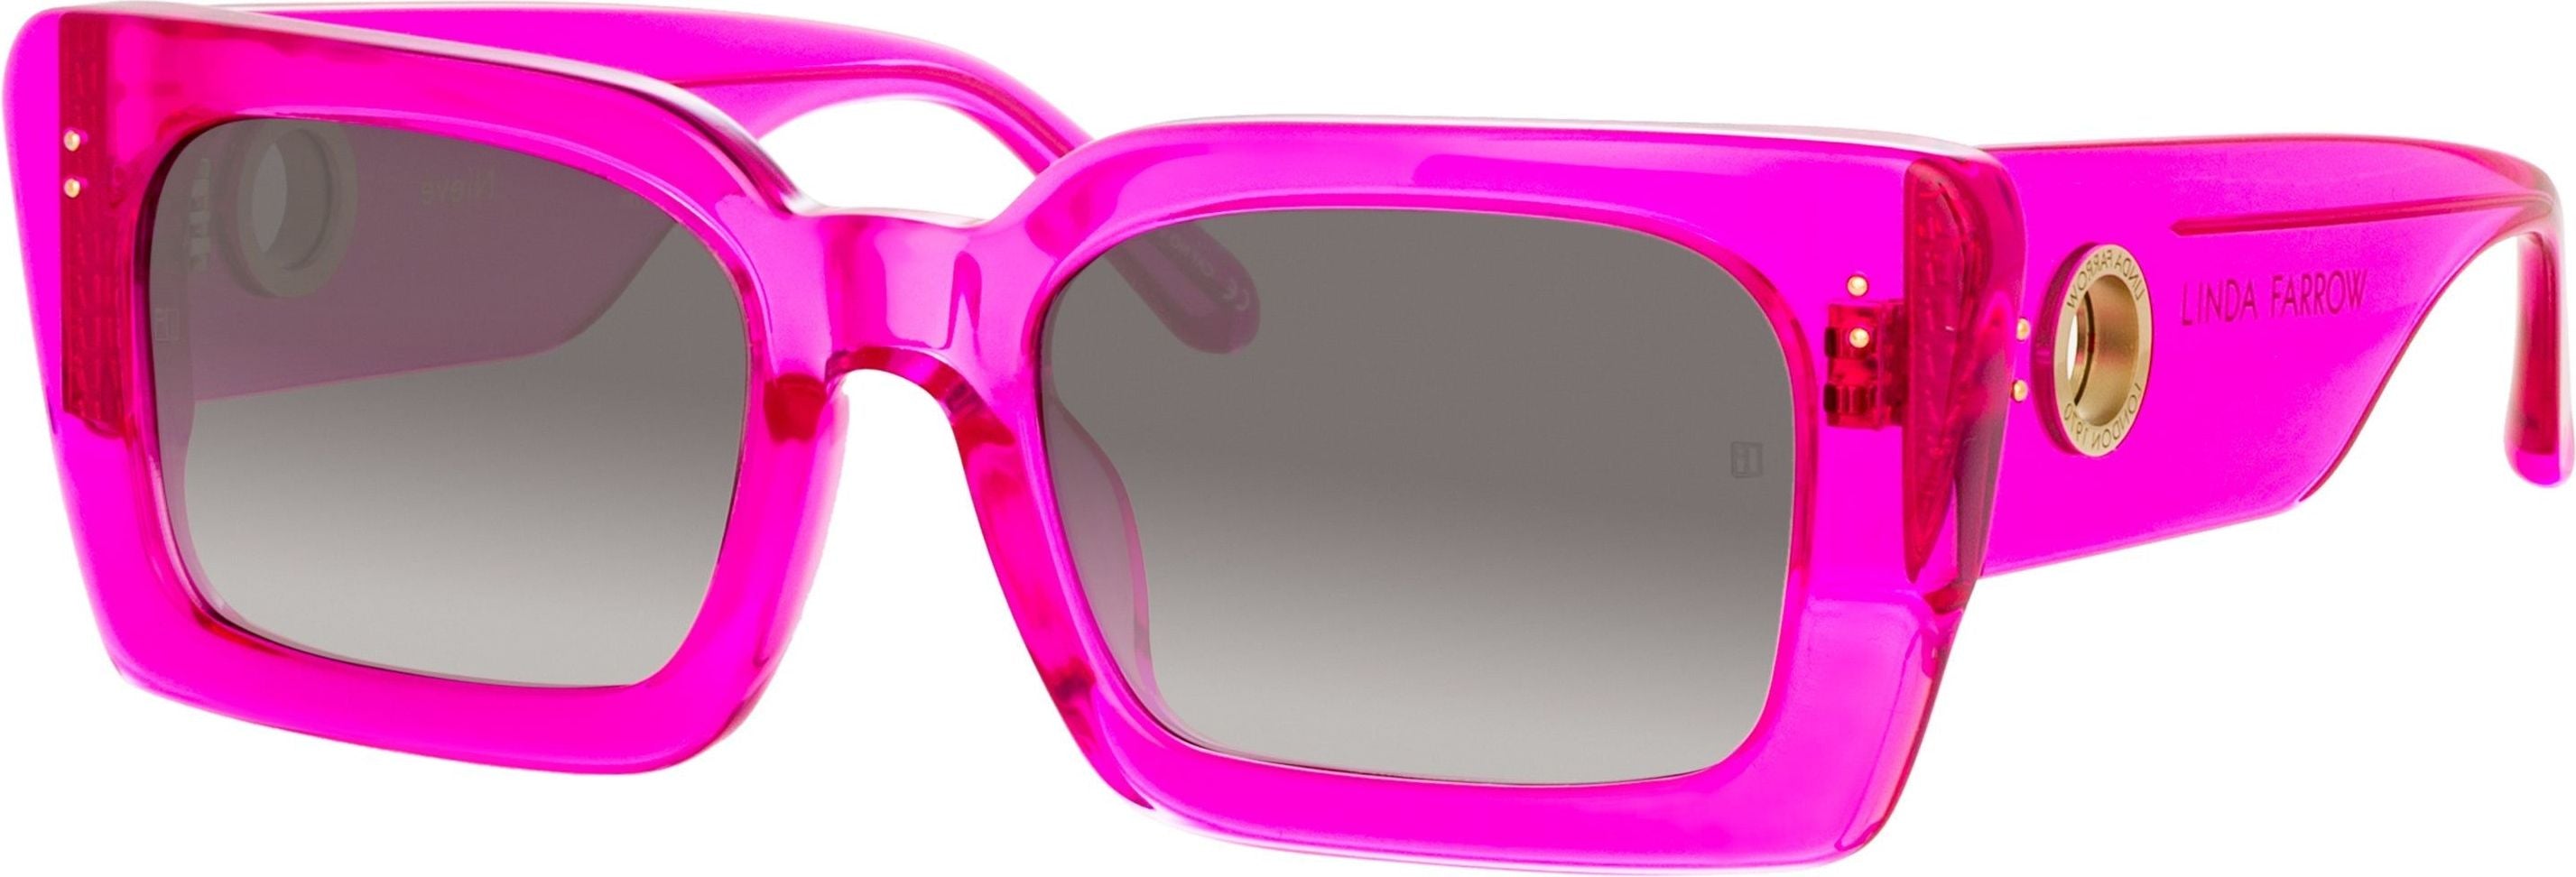 Blake Angular Sunglasses in Pink by LINDA FARROW – LINDA FARROW